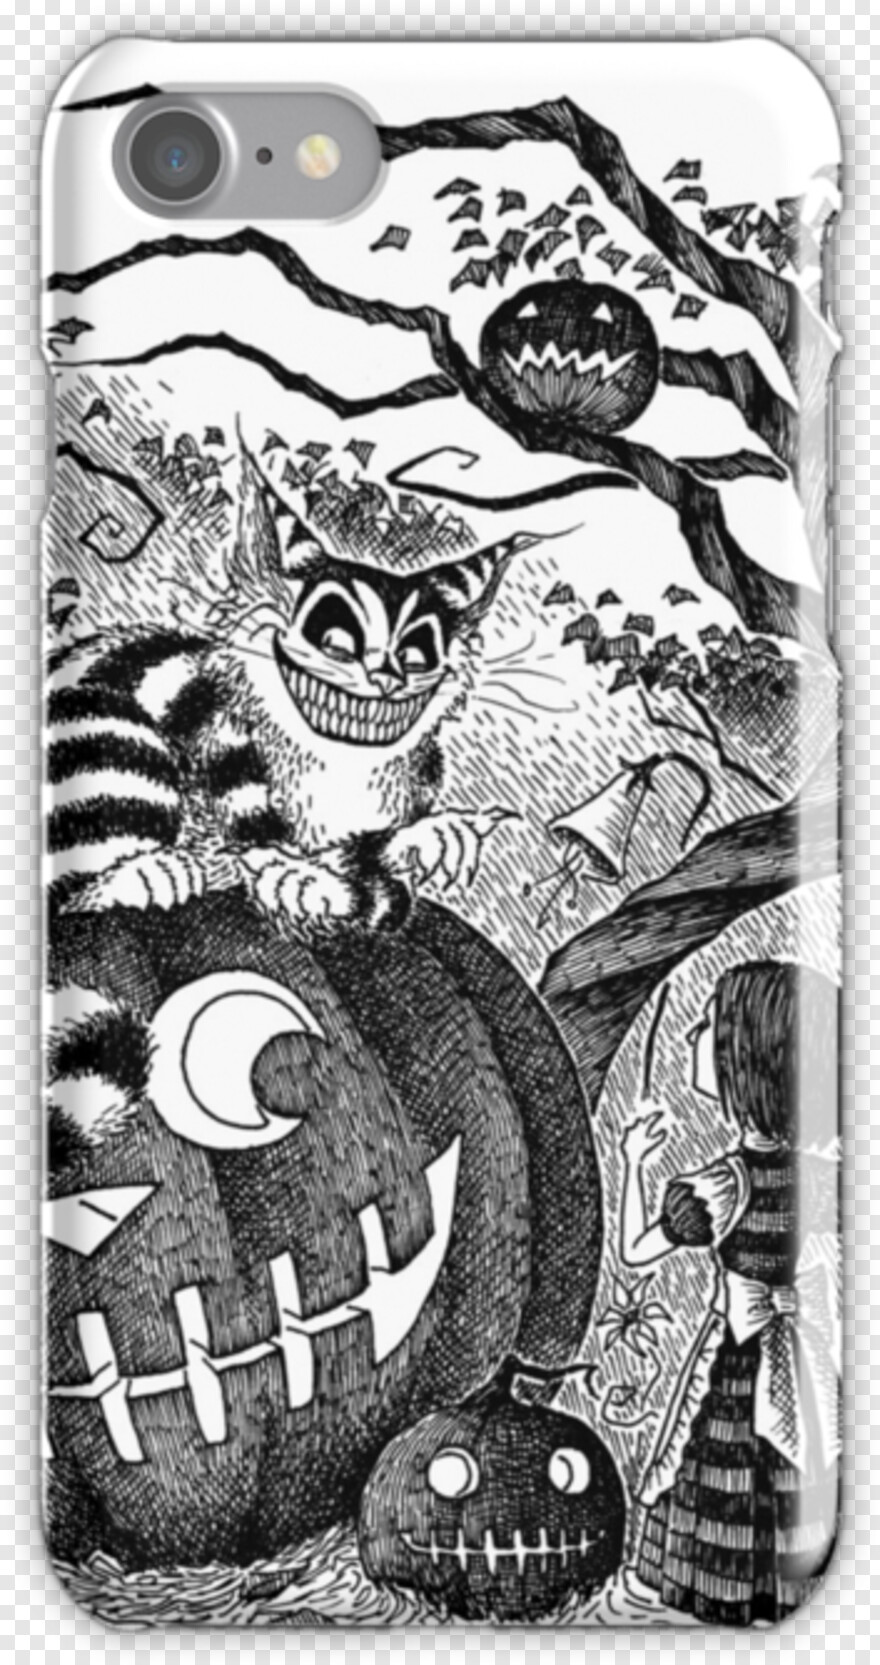  Cheshire Cat Smile, Flying Cat, Alice In Wonderland, Halloween Cat, Cheshire Cat, Cat Face